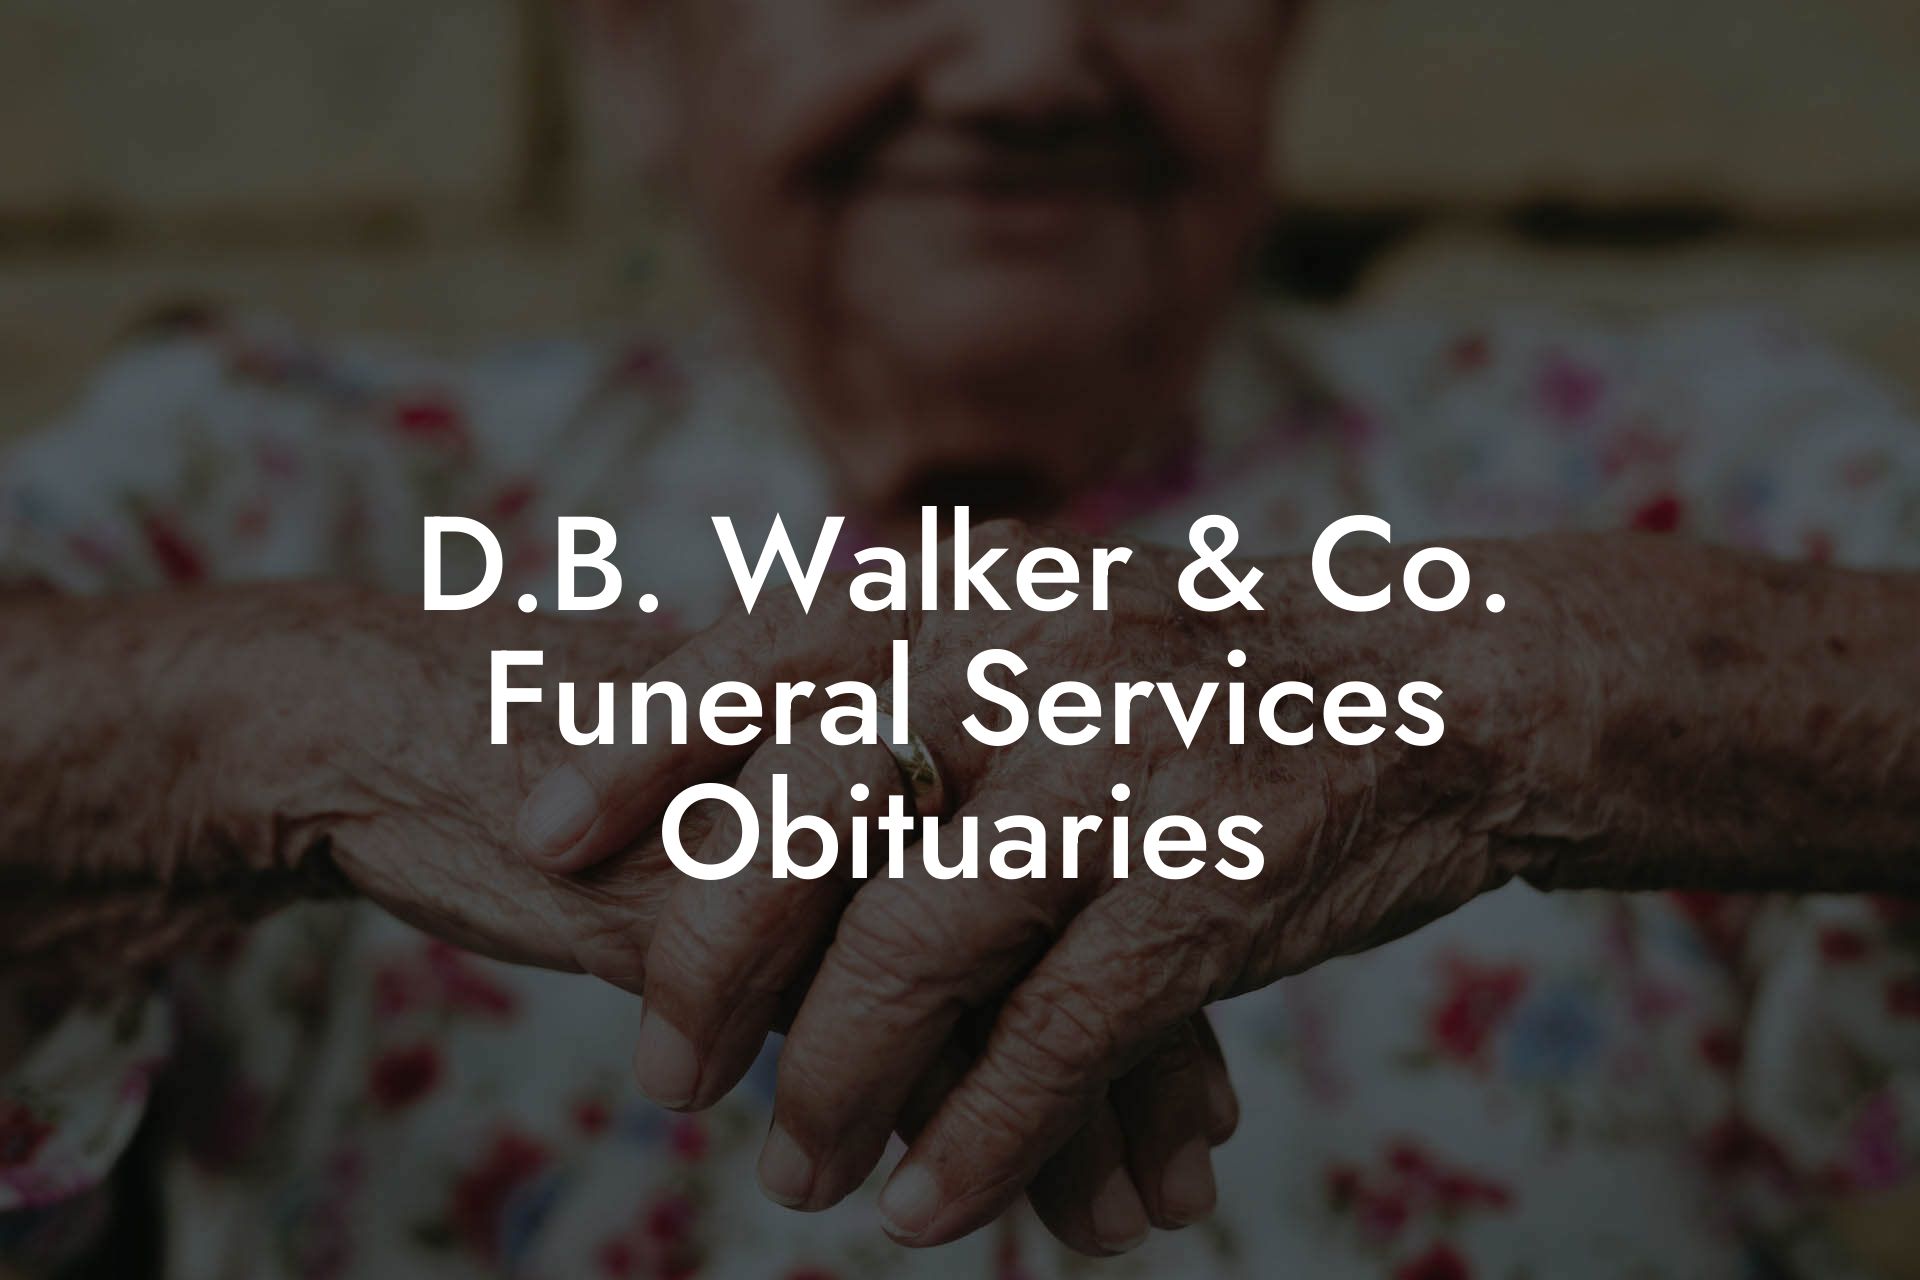 D.B. Walker & Co. Funeral Services Obituaries